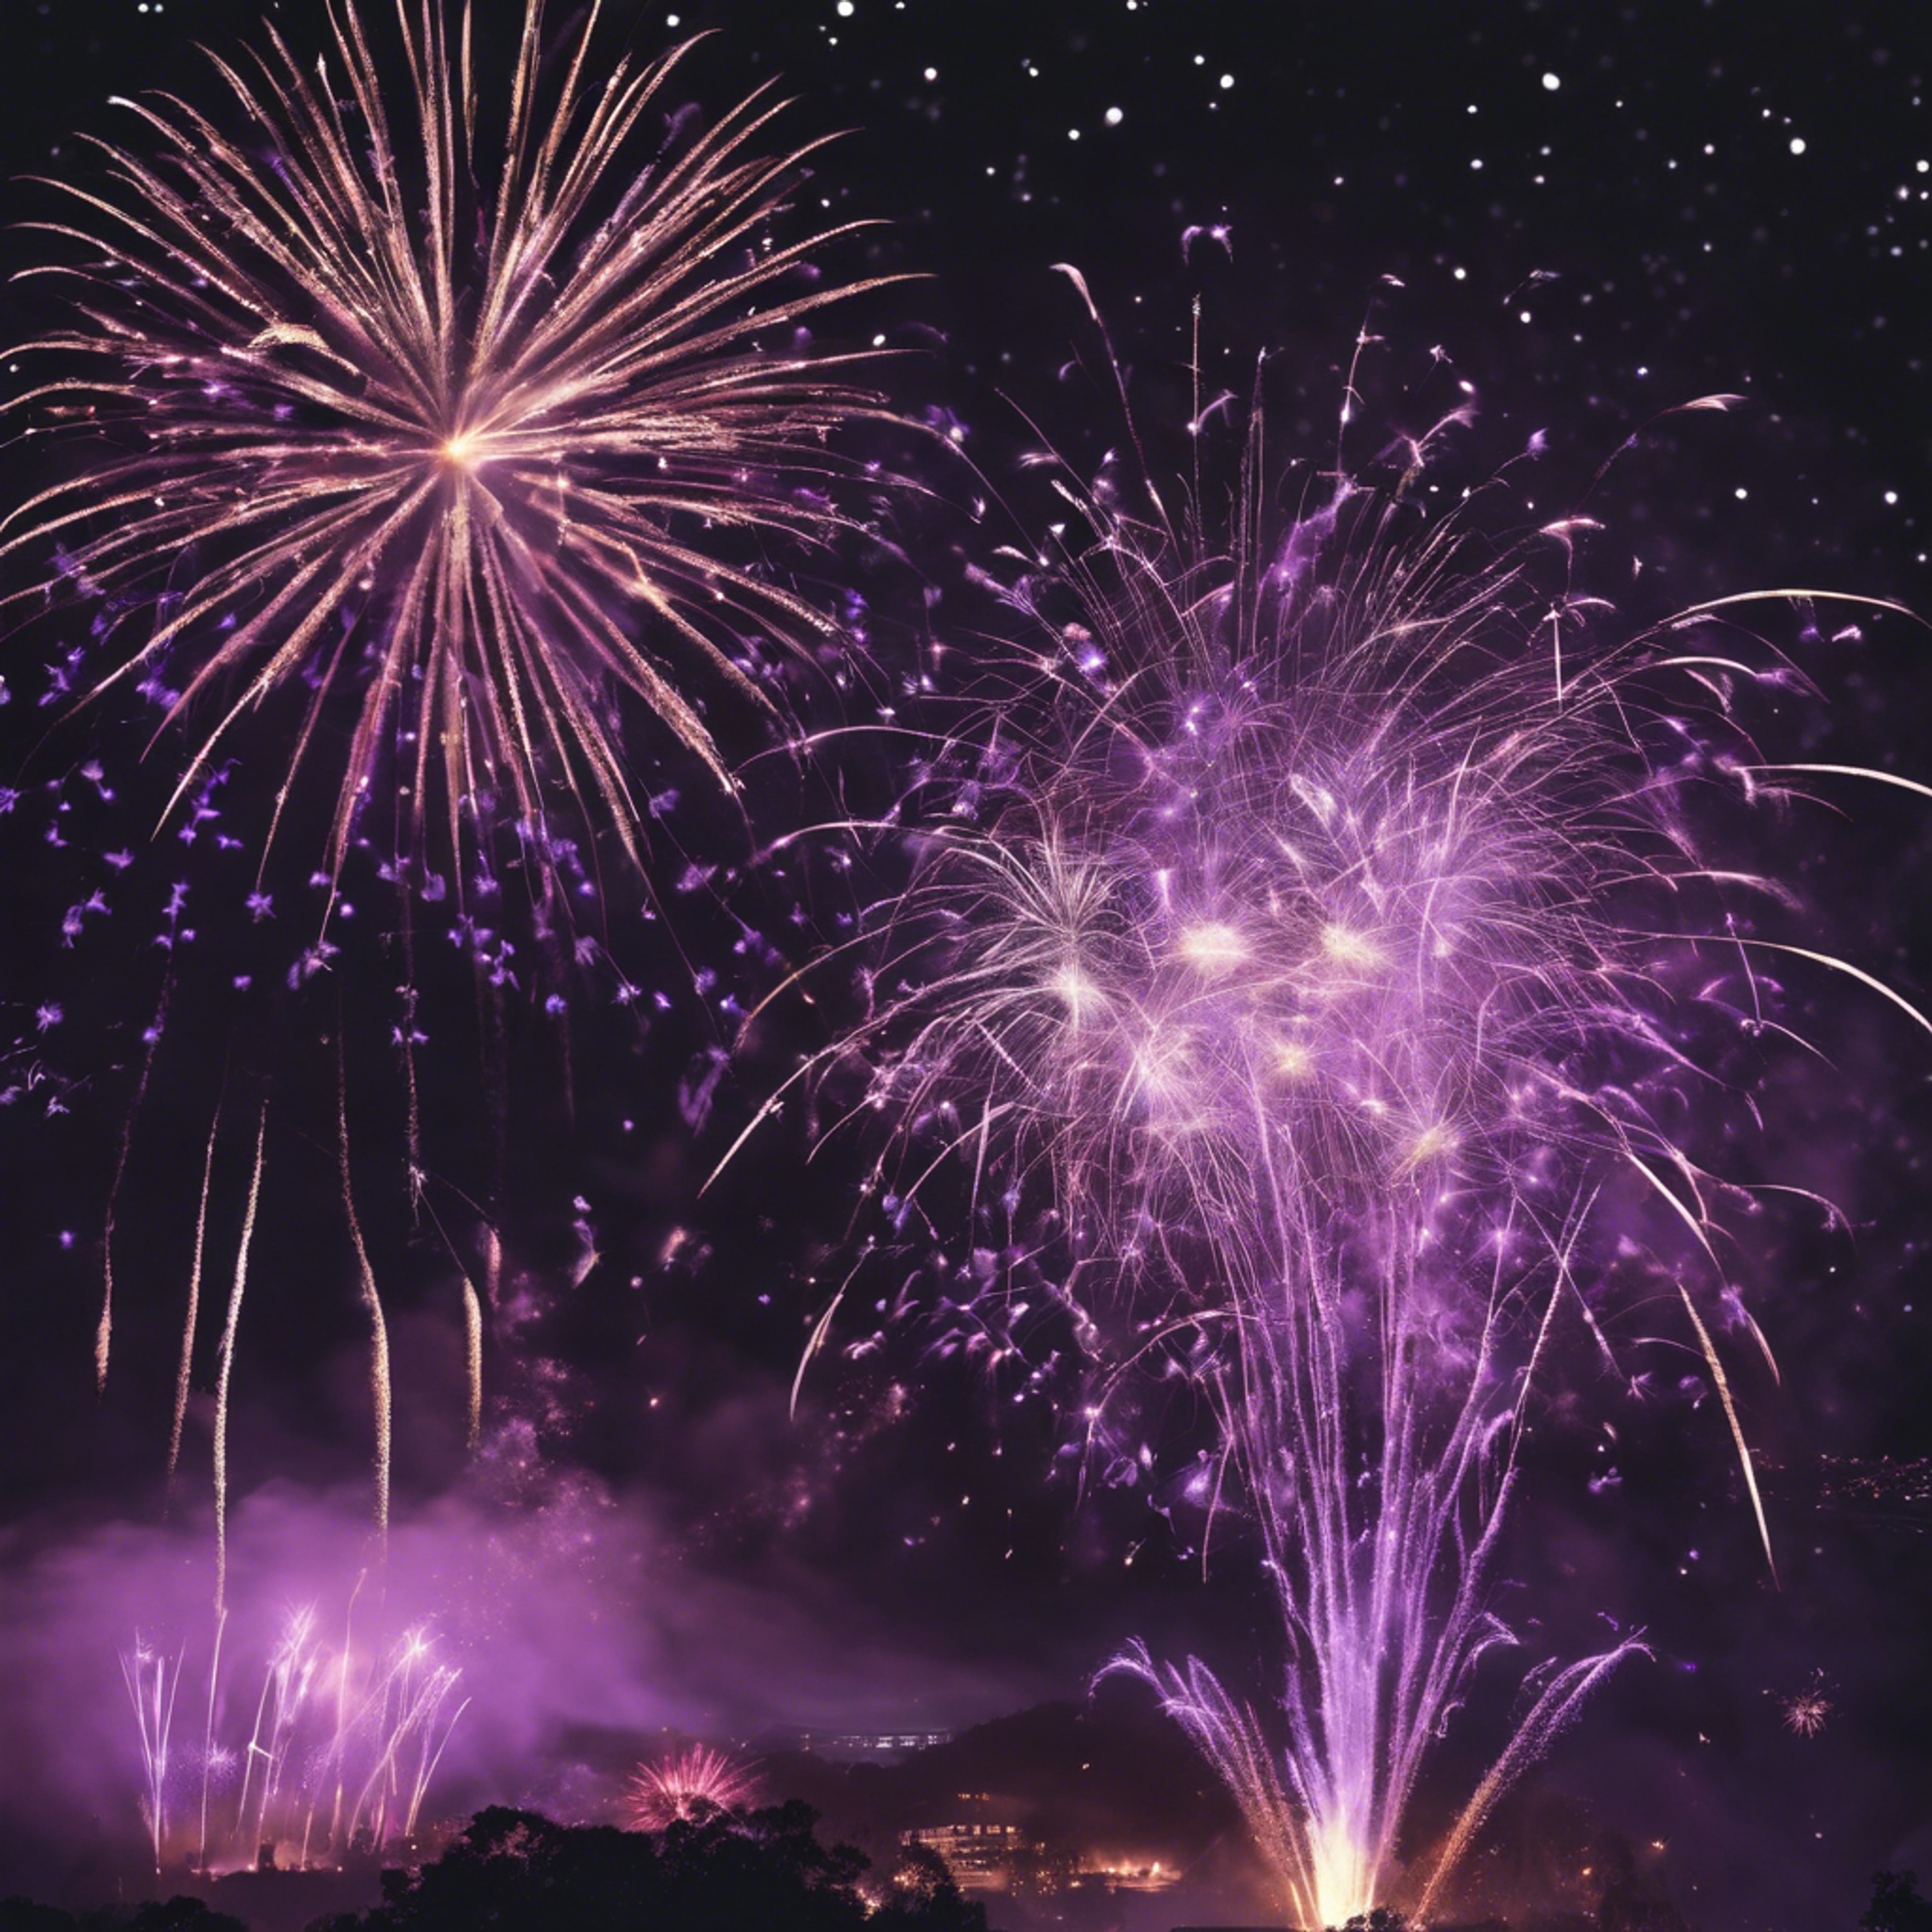 Black and purple fireworks lighting up the night sky during a grand celebration. Tapet[a63540e6fc8e4a549ec0]